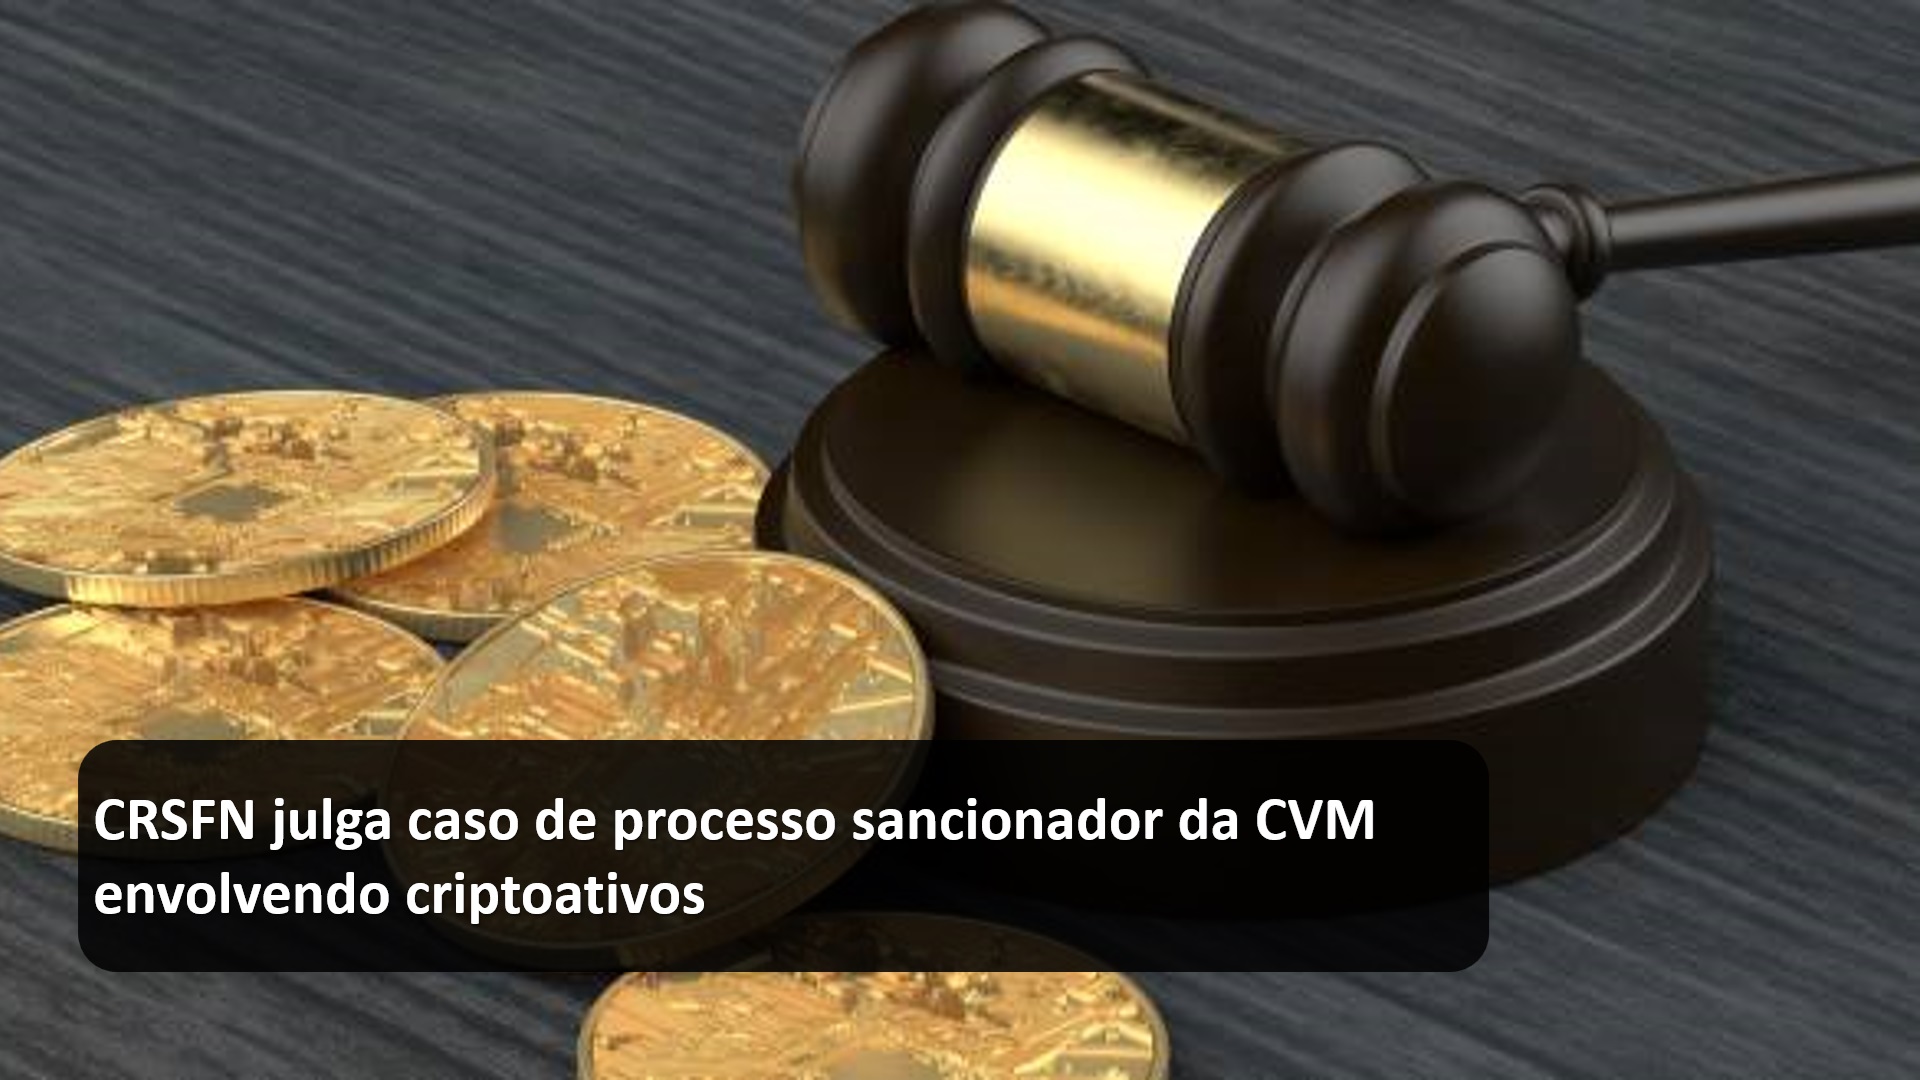 CRSFN julga caso de processo sancionador da CVM envolvendo criptoativos